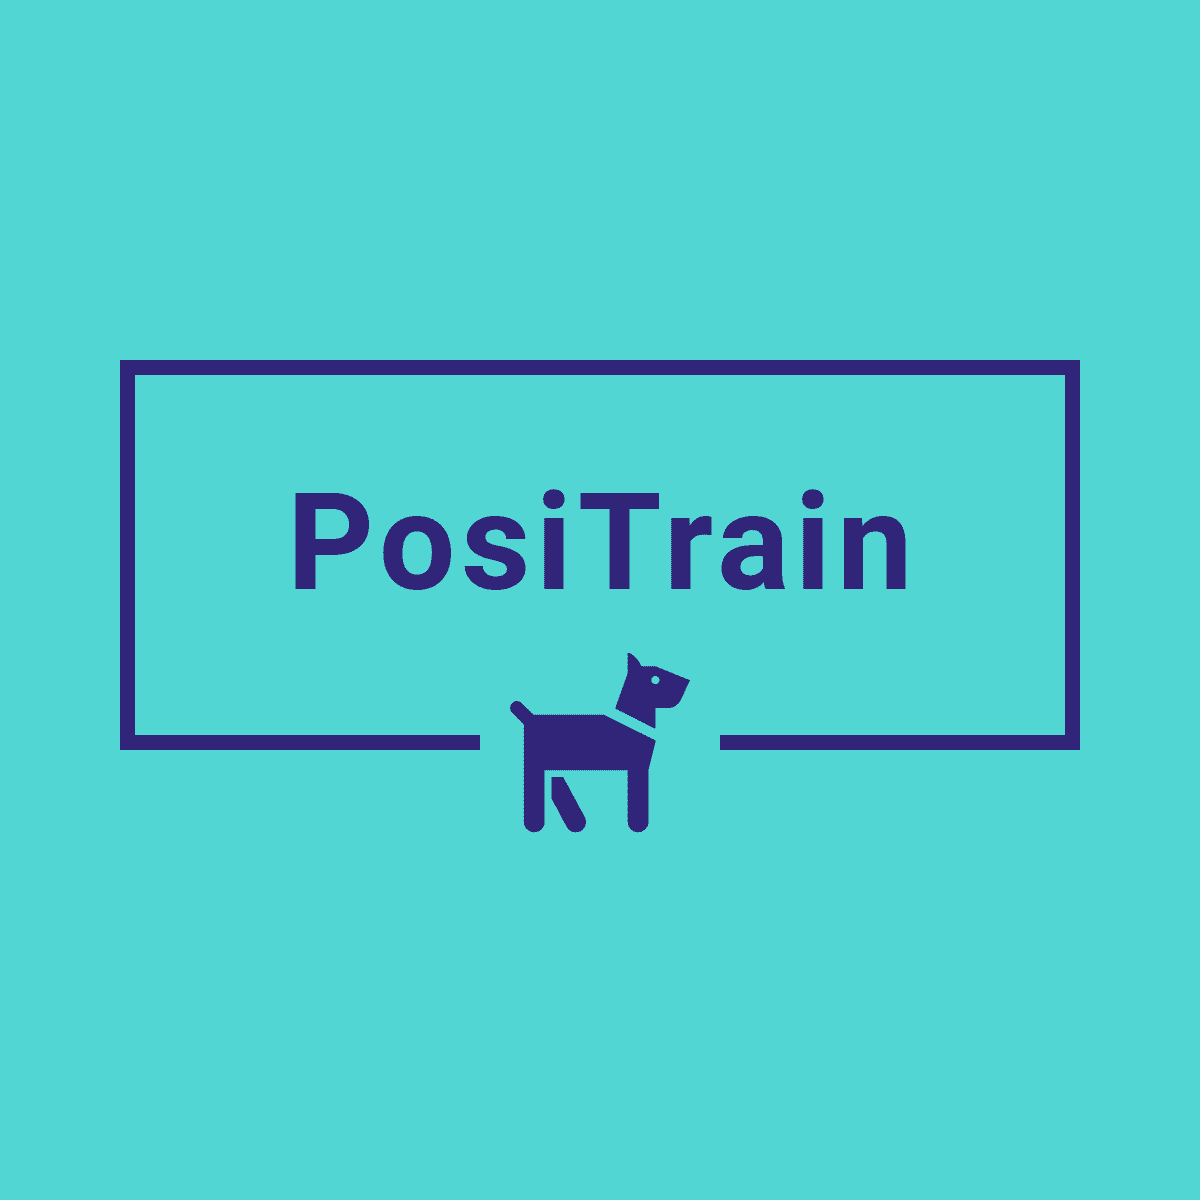 PosiTrain logo